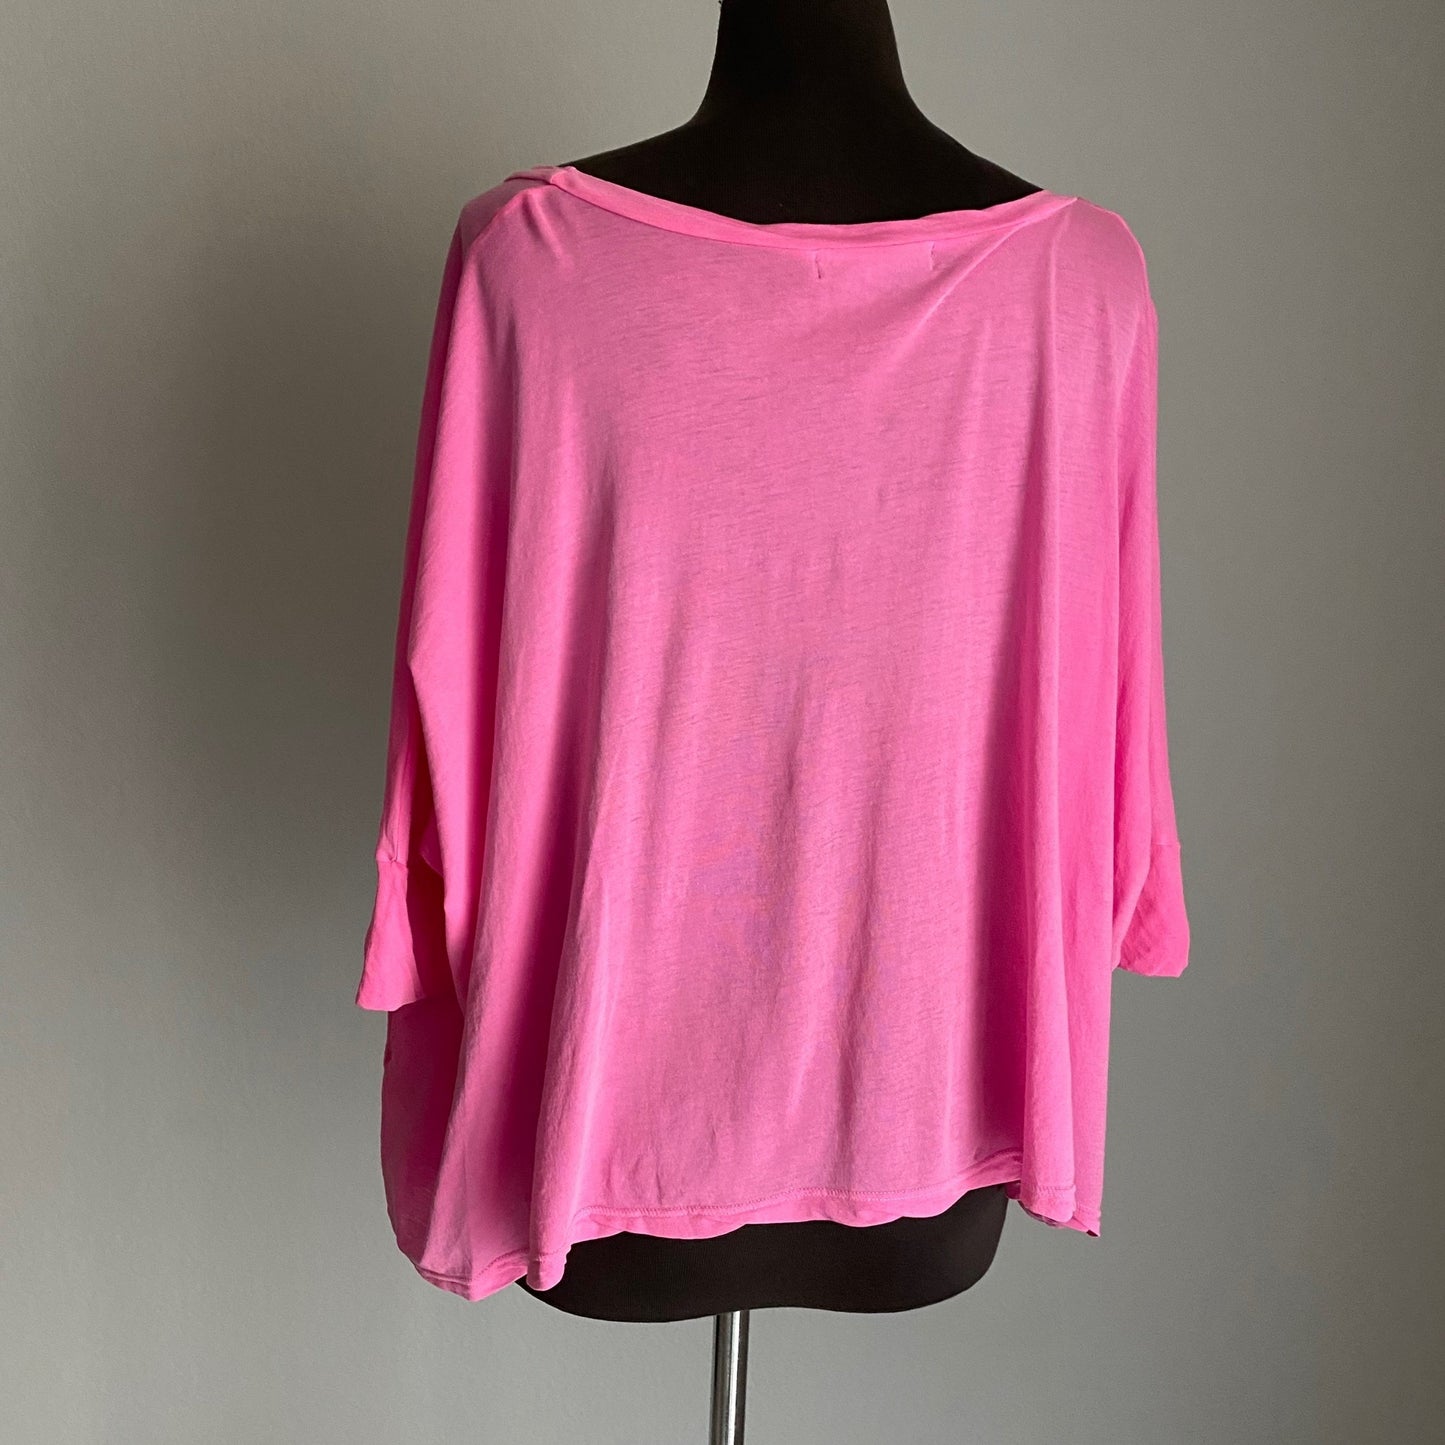 Velvet sz S 100% Cotton short sleeve flared crop top shirt blouse